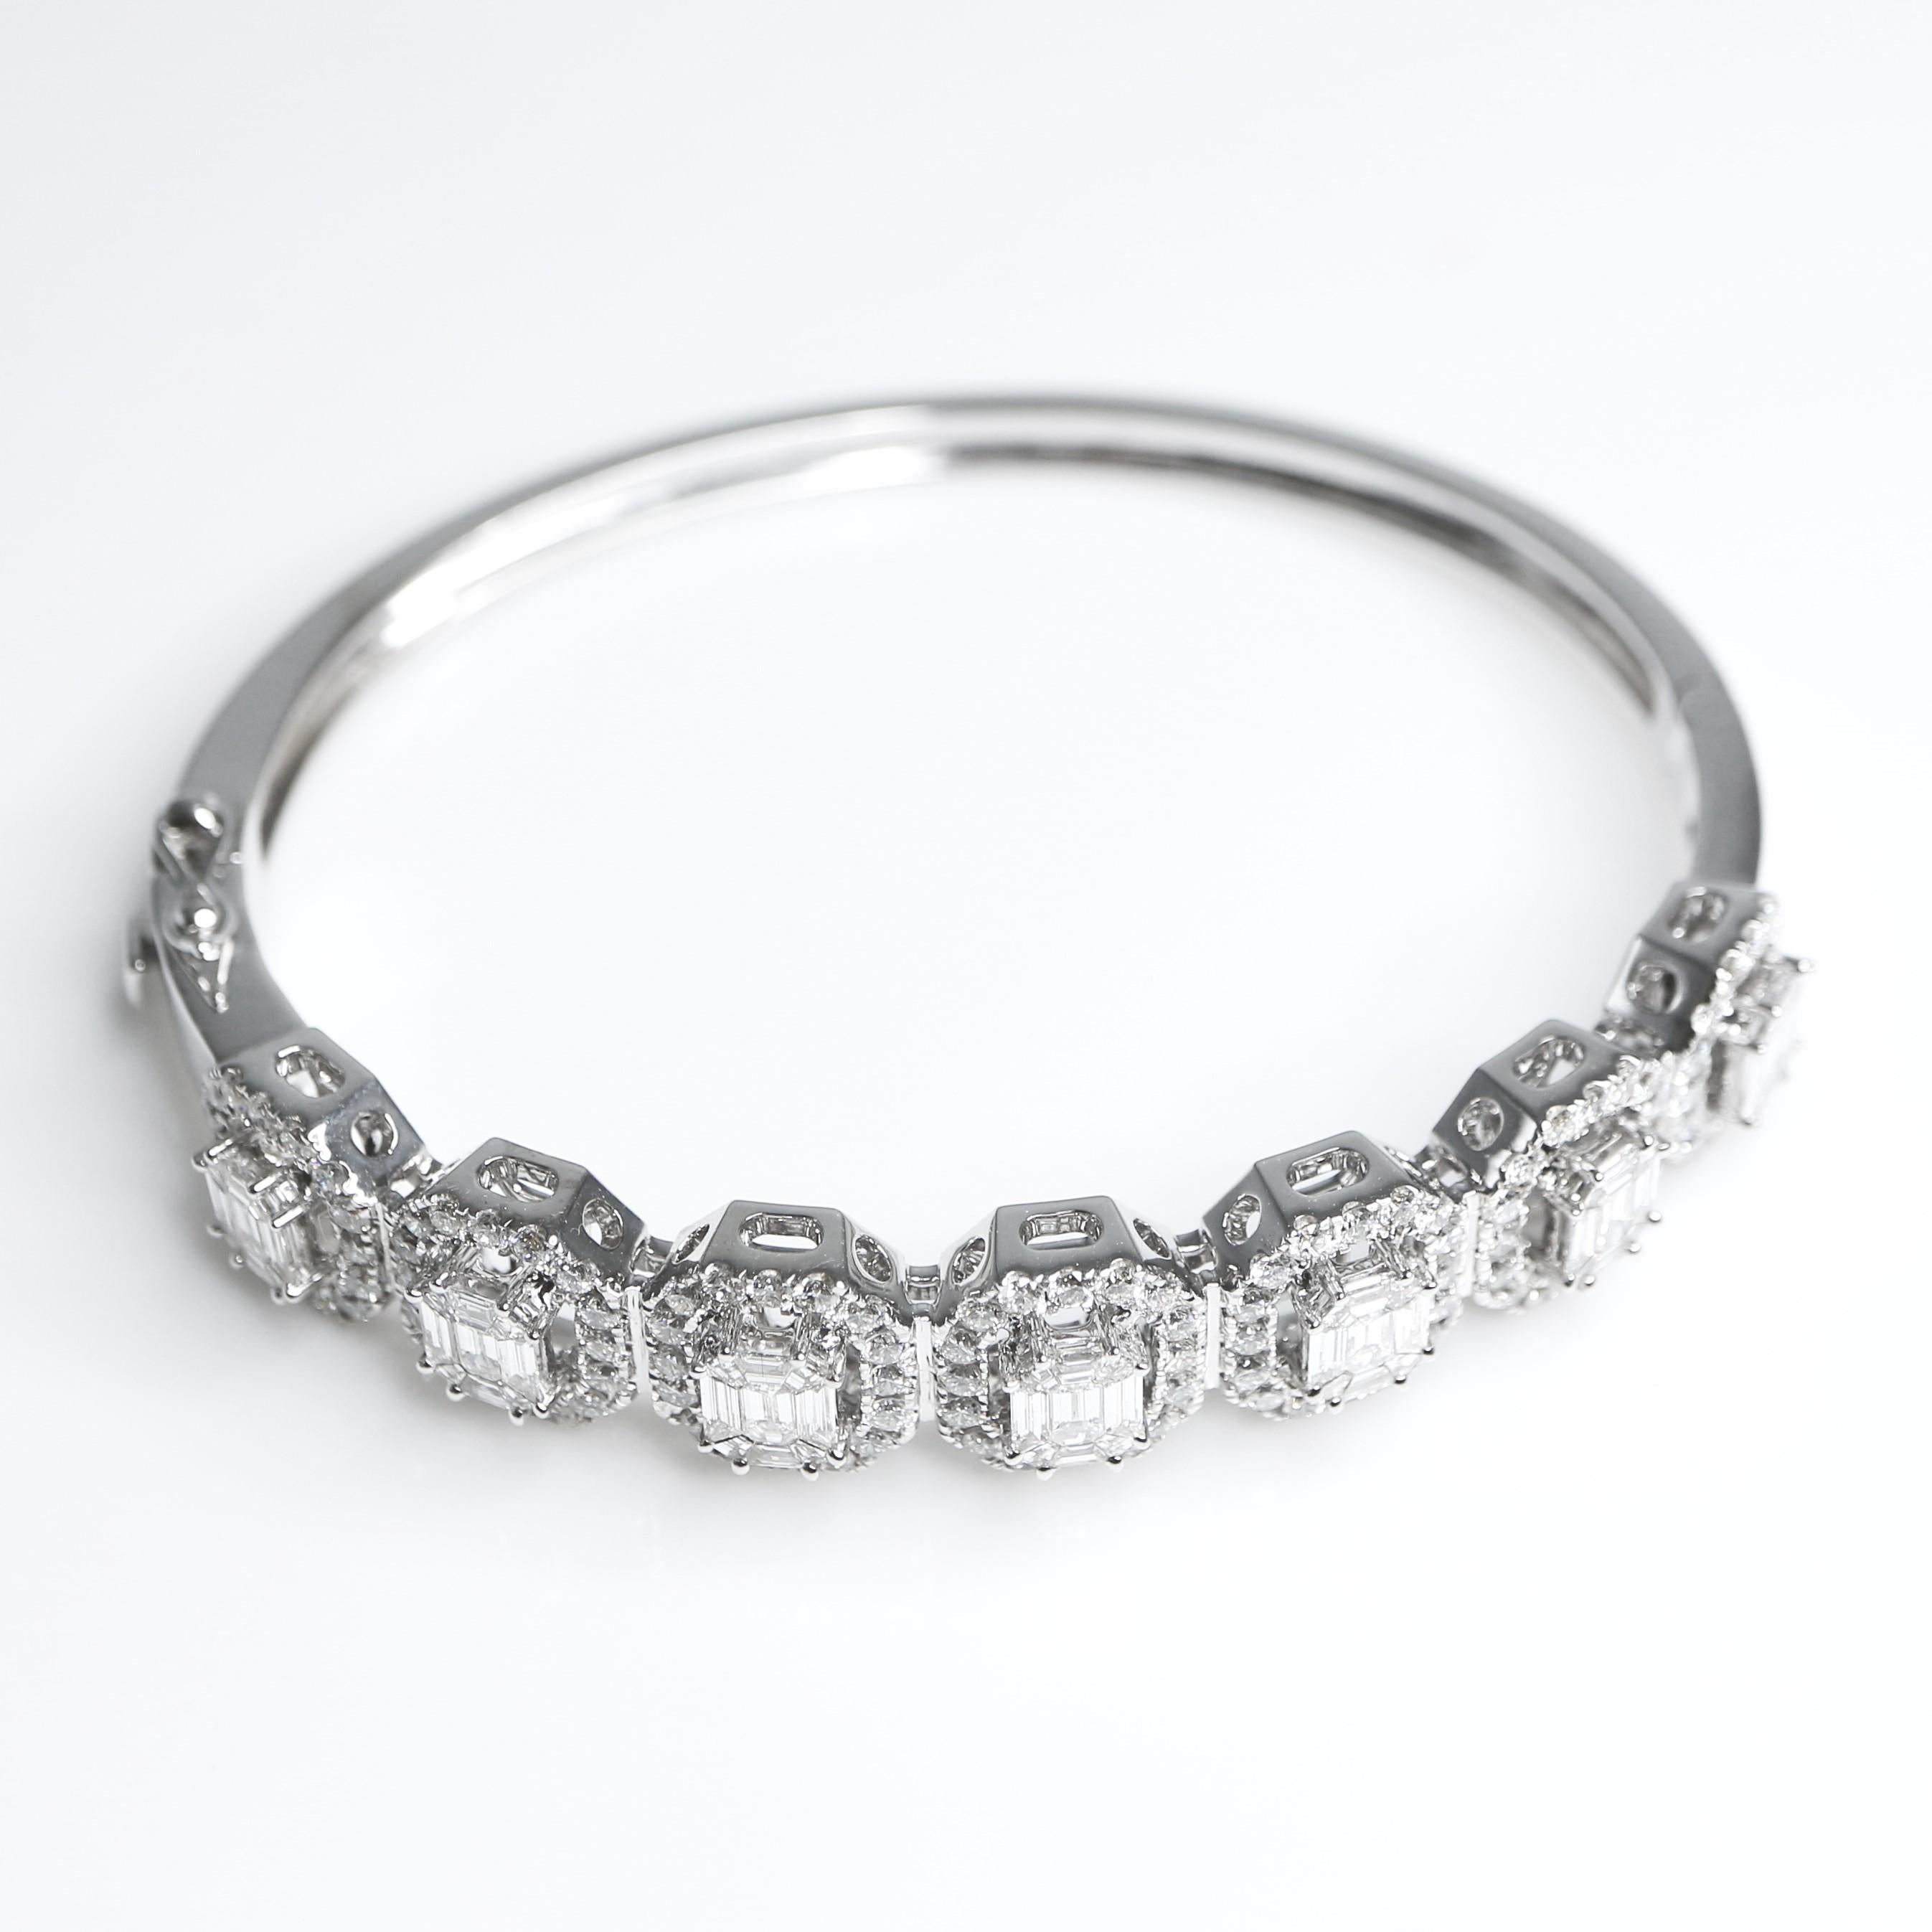 IGI 14k 3.92 Carat Diamond Antique Art Deco Bangle Bracelet For Sale 1